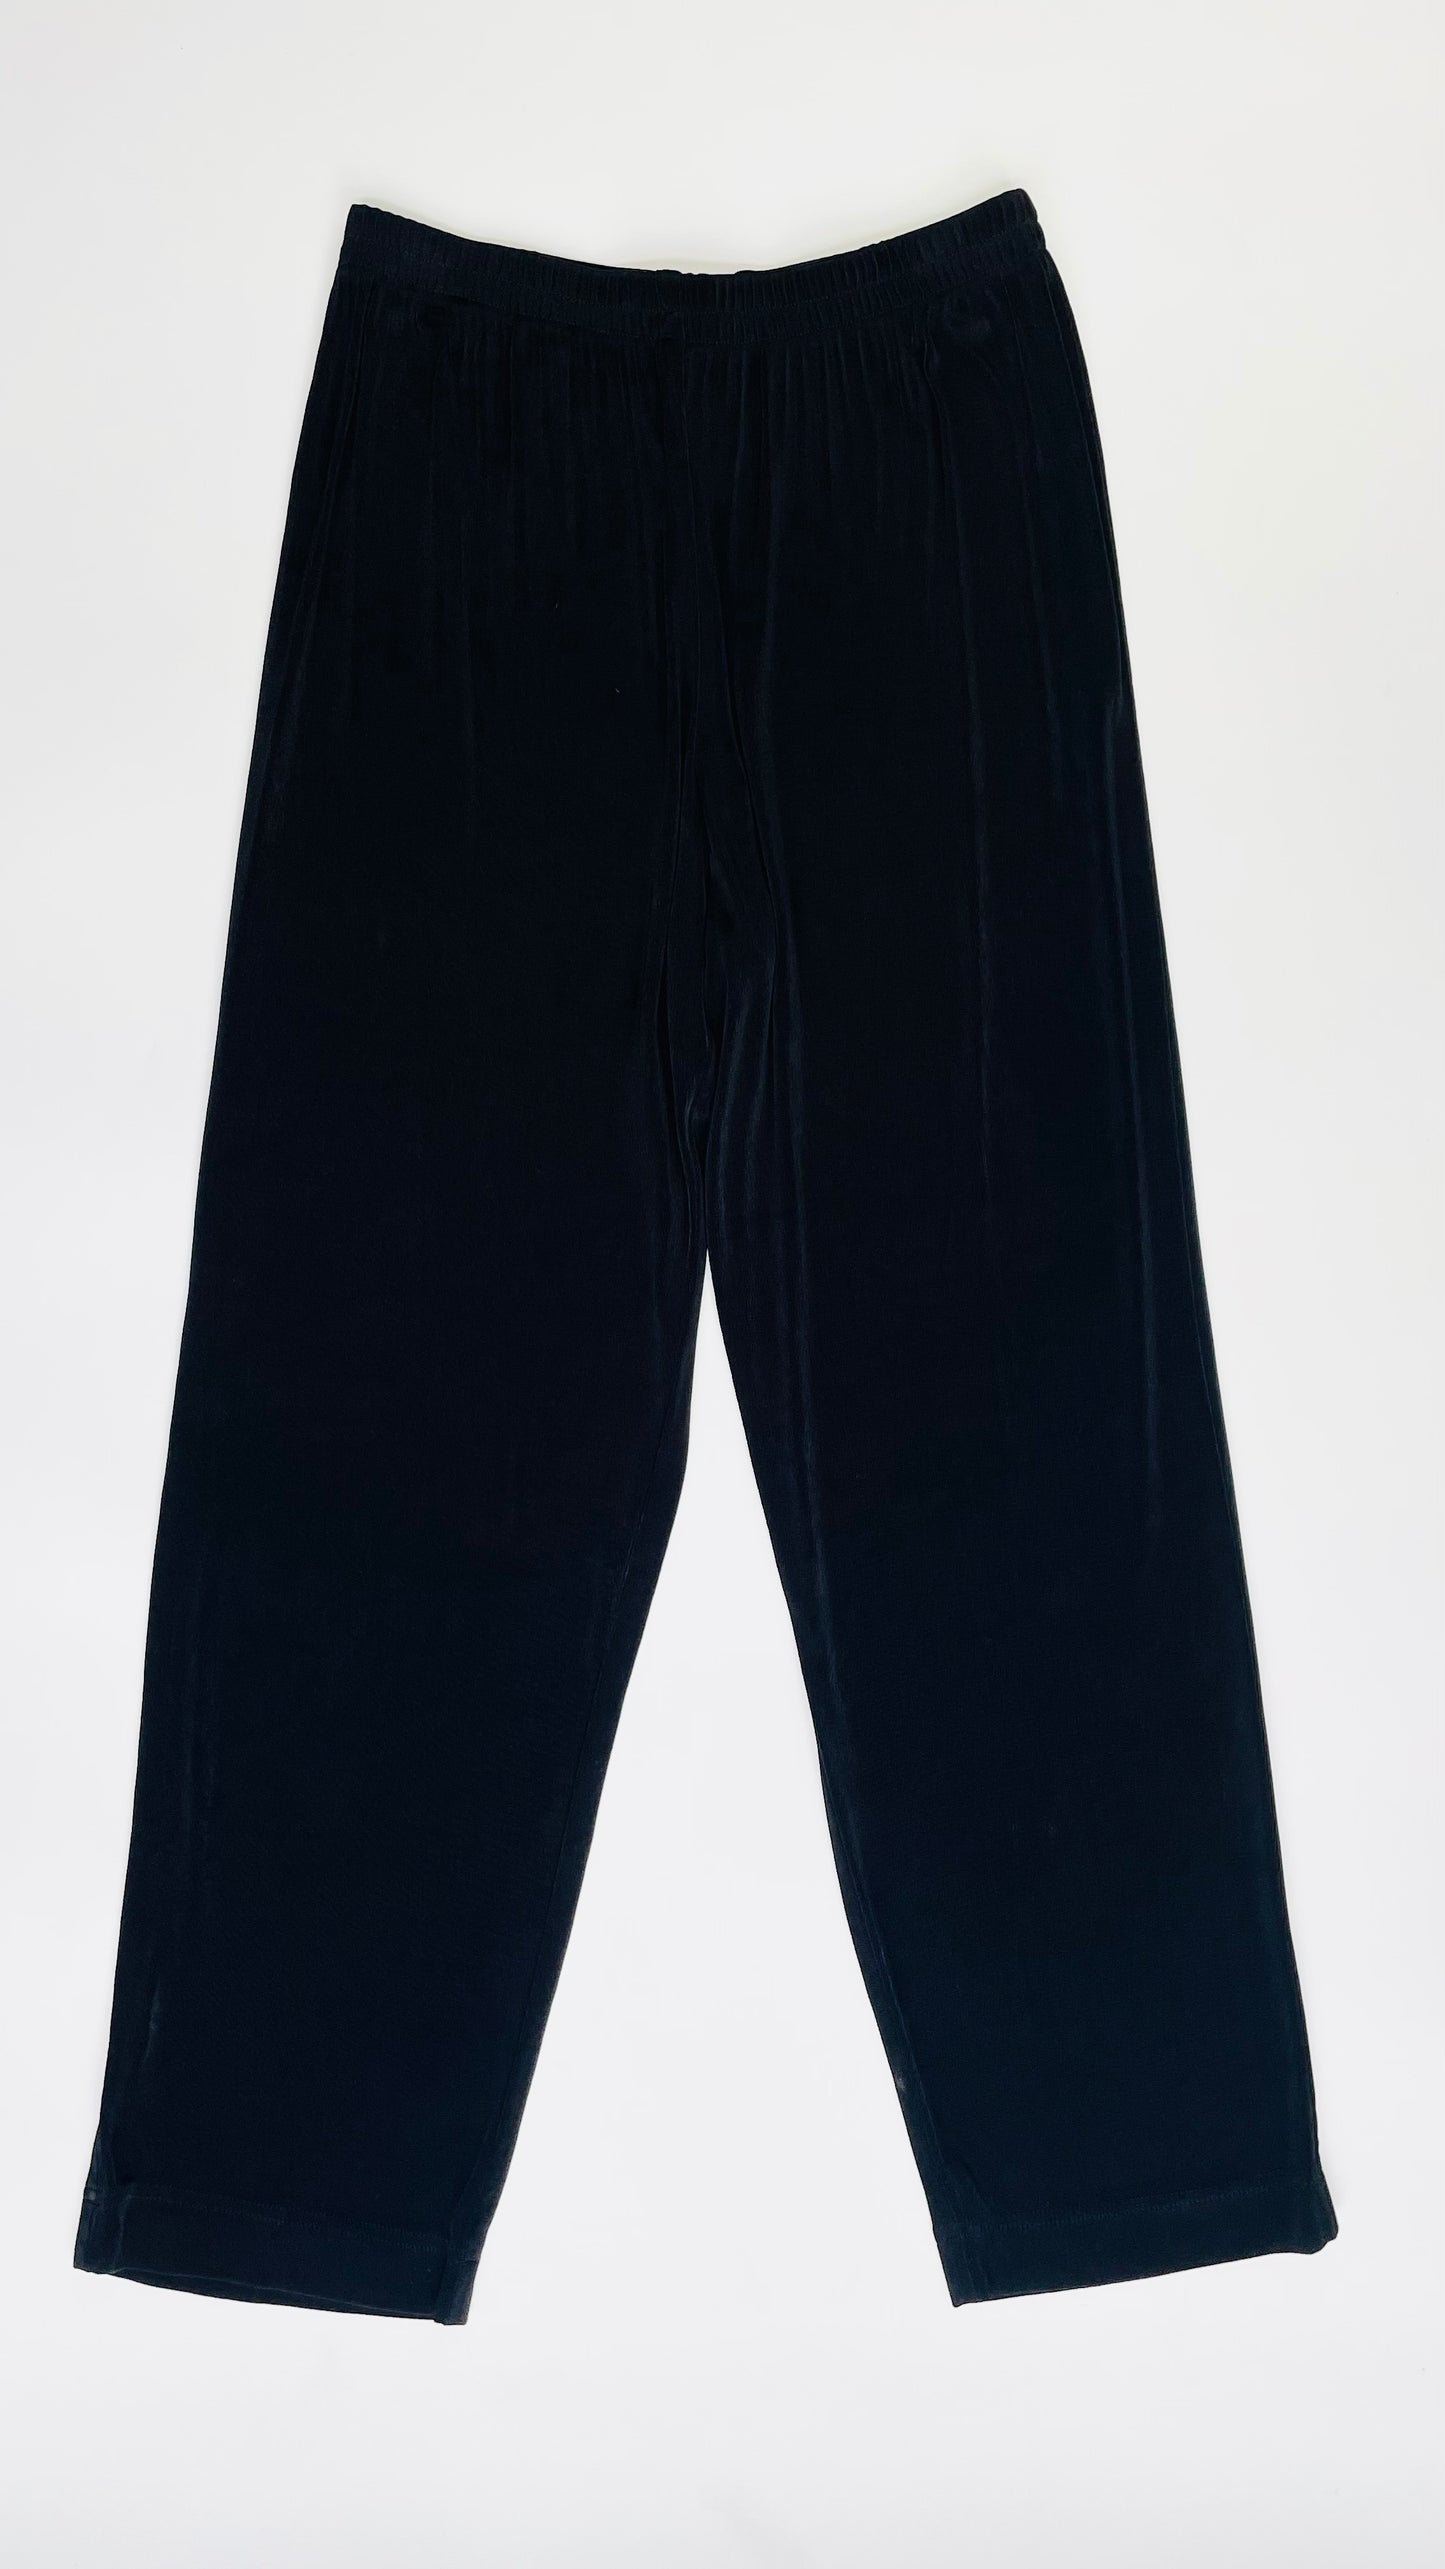 Vintage black 90s knit straight leg dress pants - Size 10